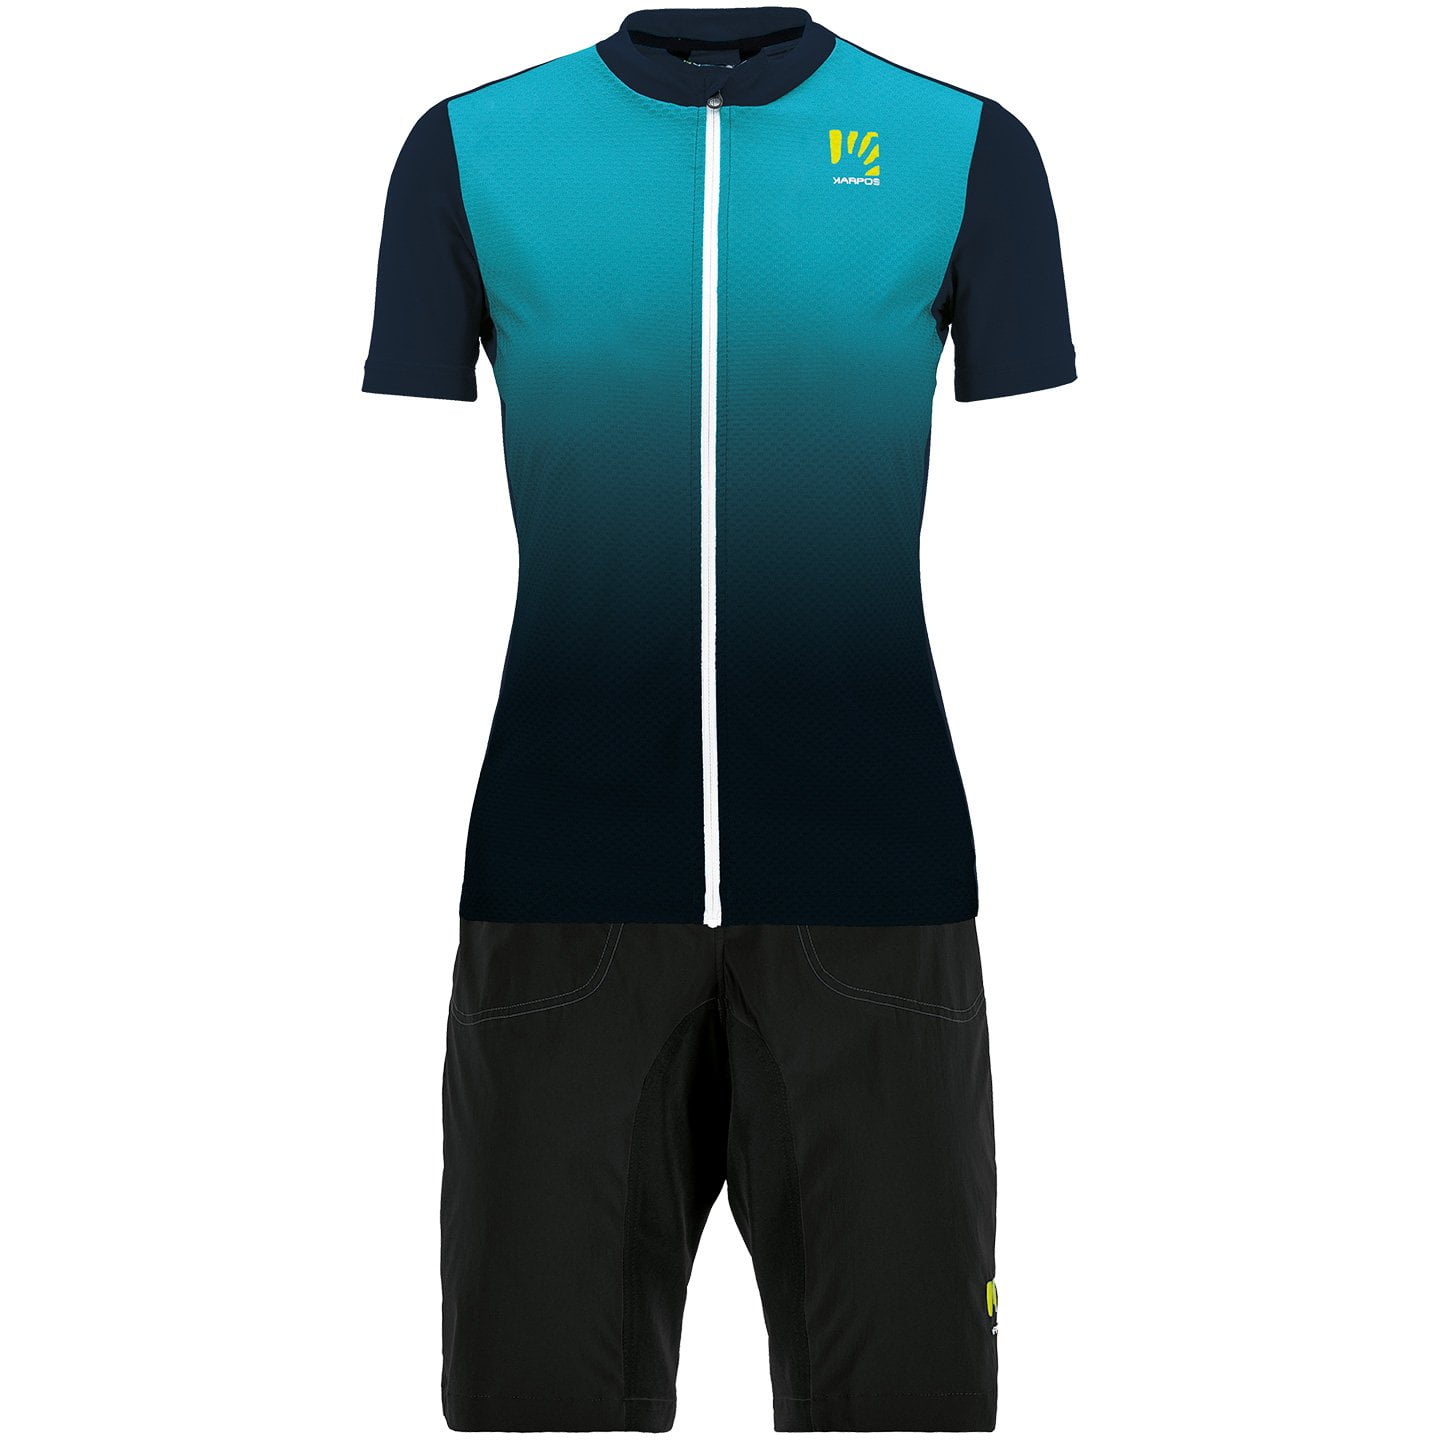 KARPOS Verve Evo Women’s Set (cycling jersey + cycling shorts) Women’s Set (2 pieces), Cycling clothing